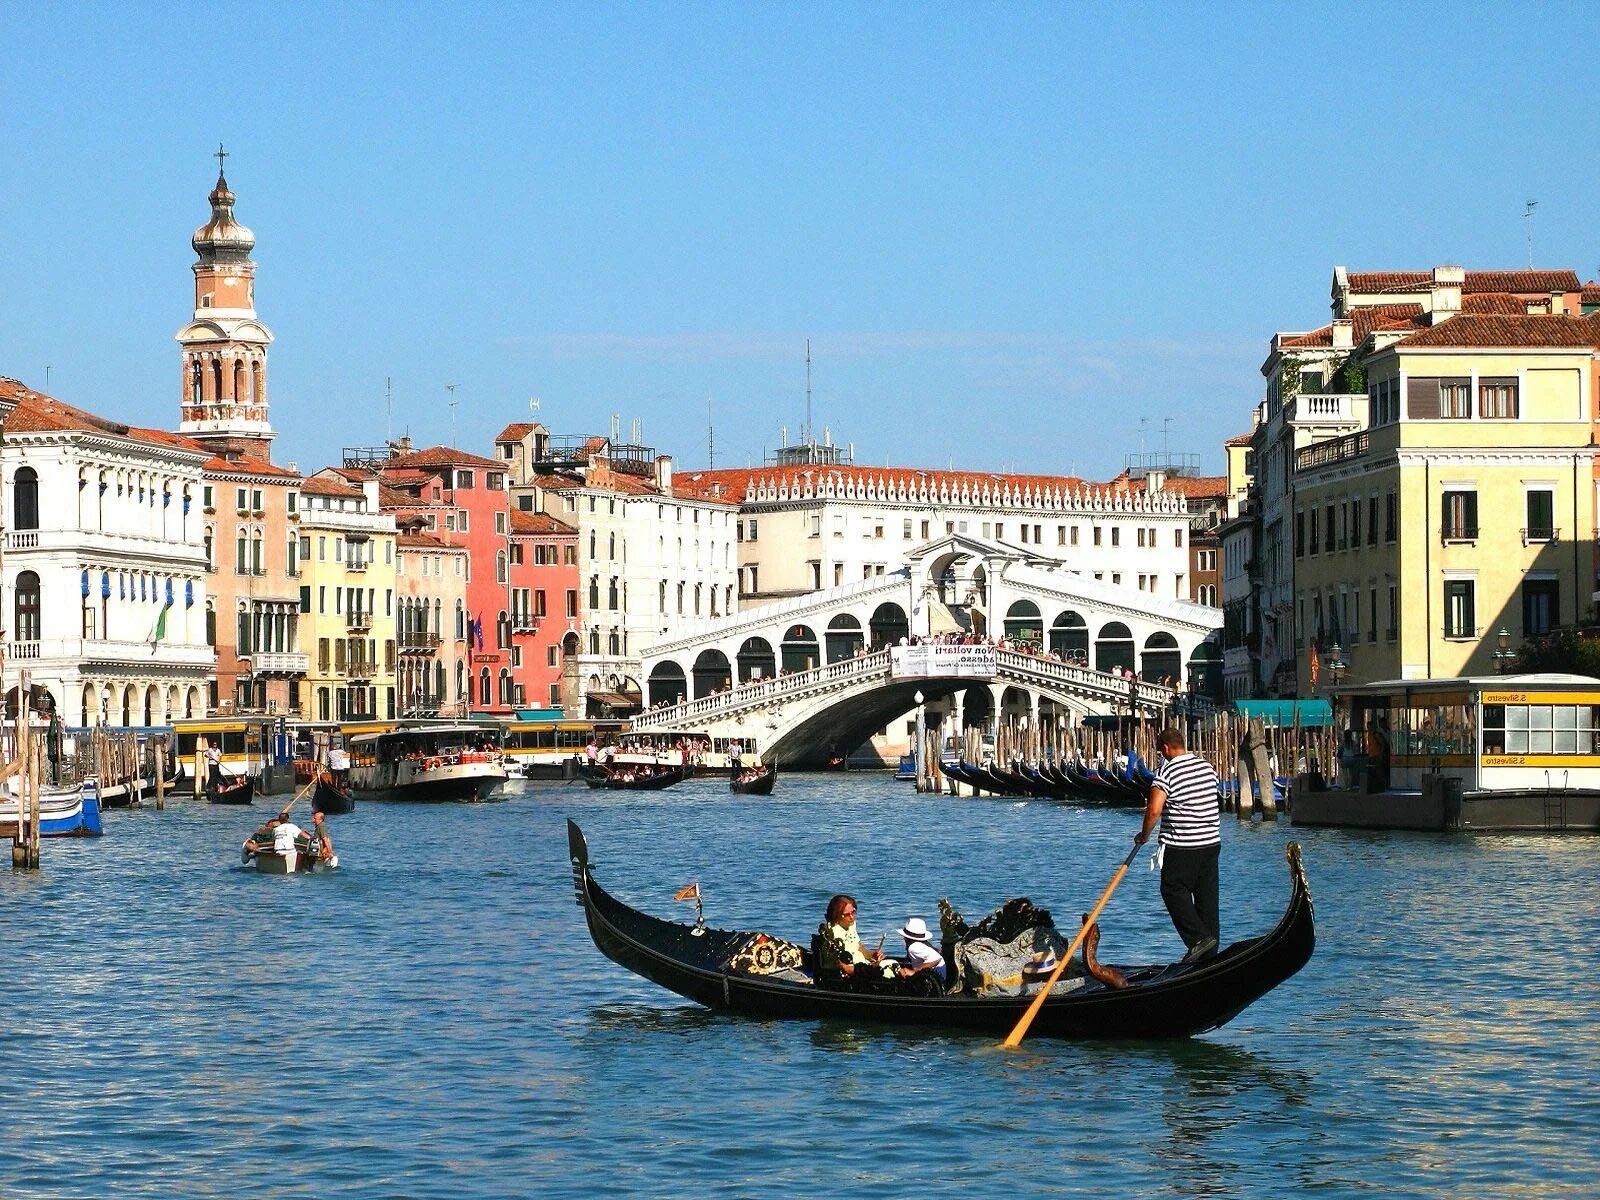 Италия туризм Венеция. Италия туристы Венеция. Римини Венеция. Венеция (коммуна). Italy travel